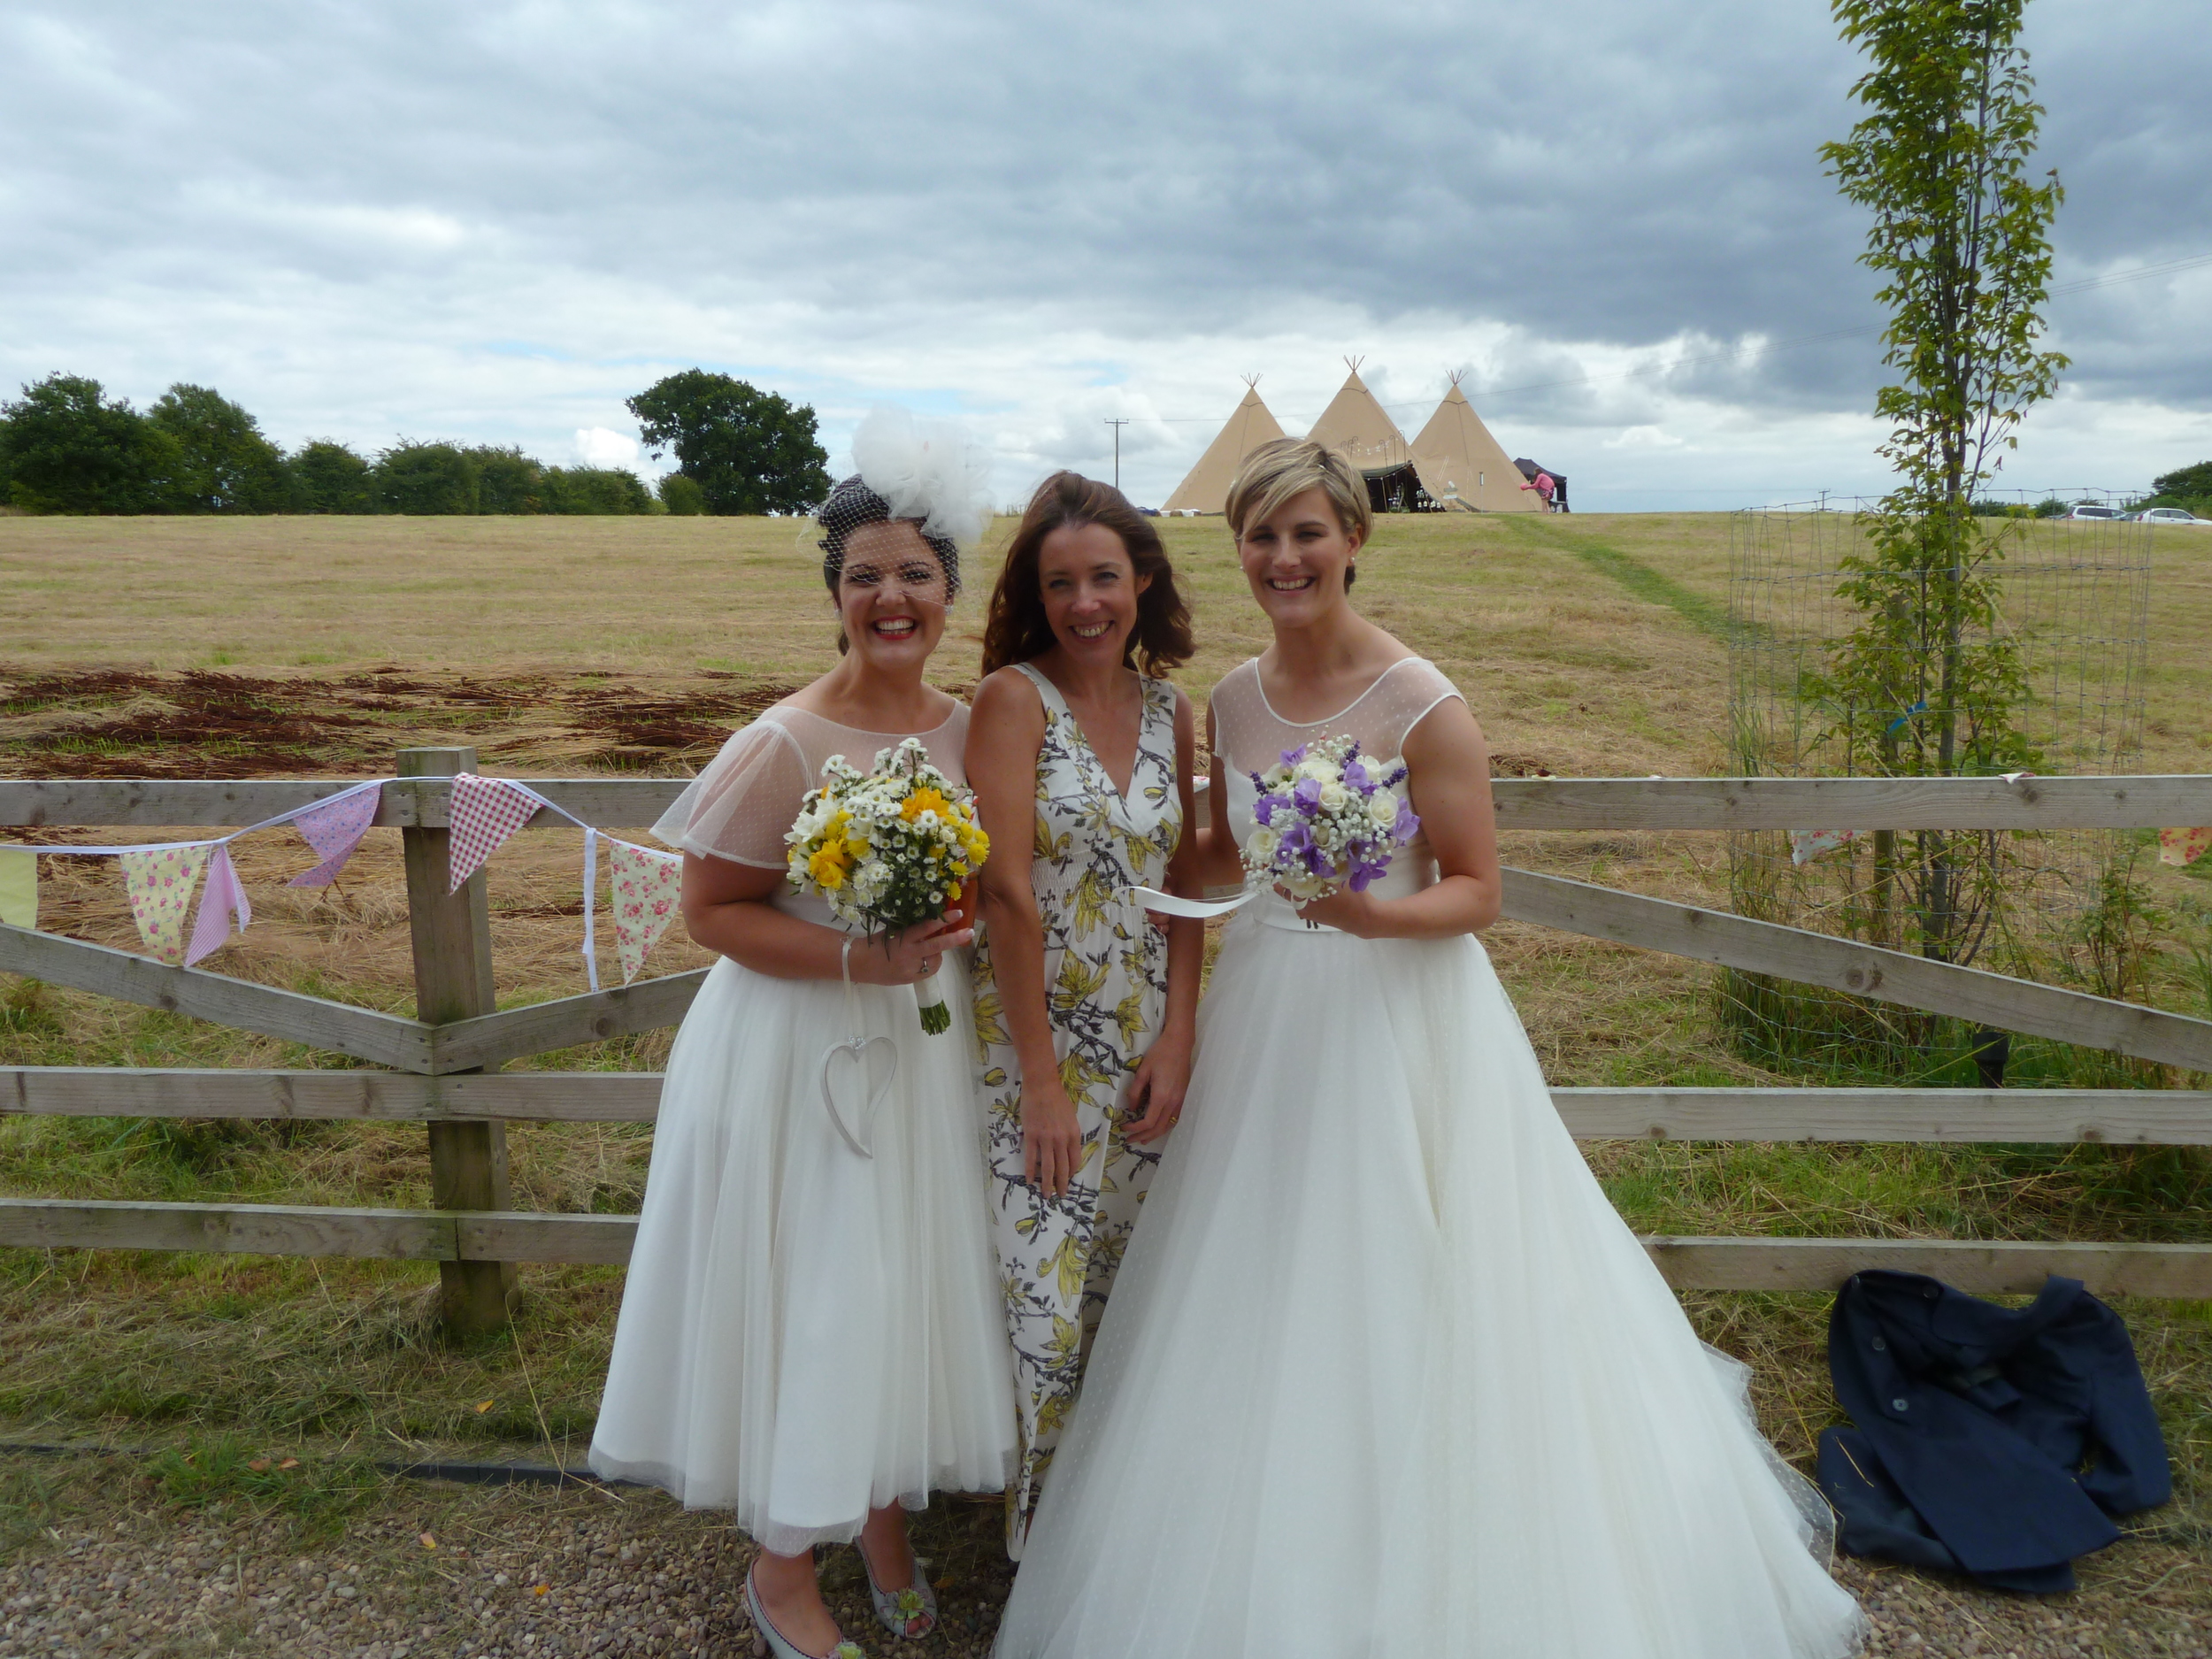 Lisa & Hayley - Outdoor Tipi Wedding Ceremony | www.myperfectceremony.co.uk